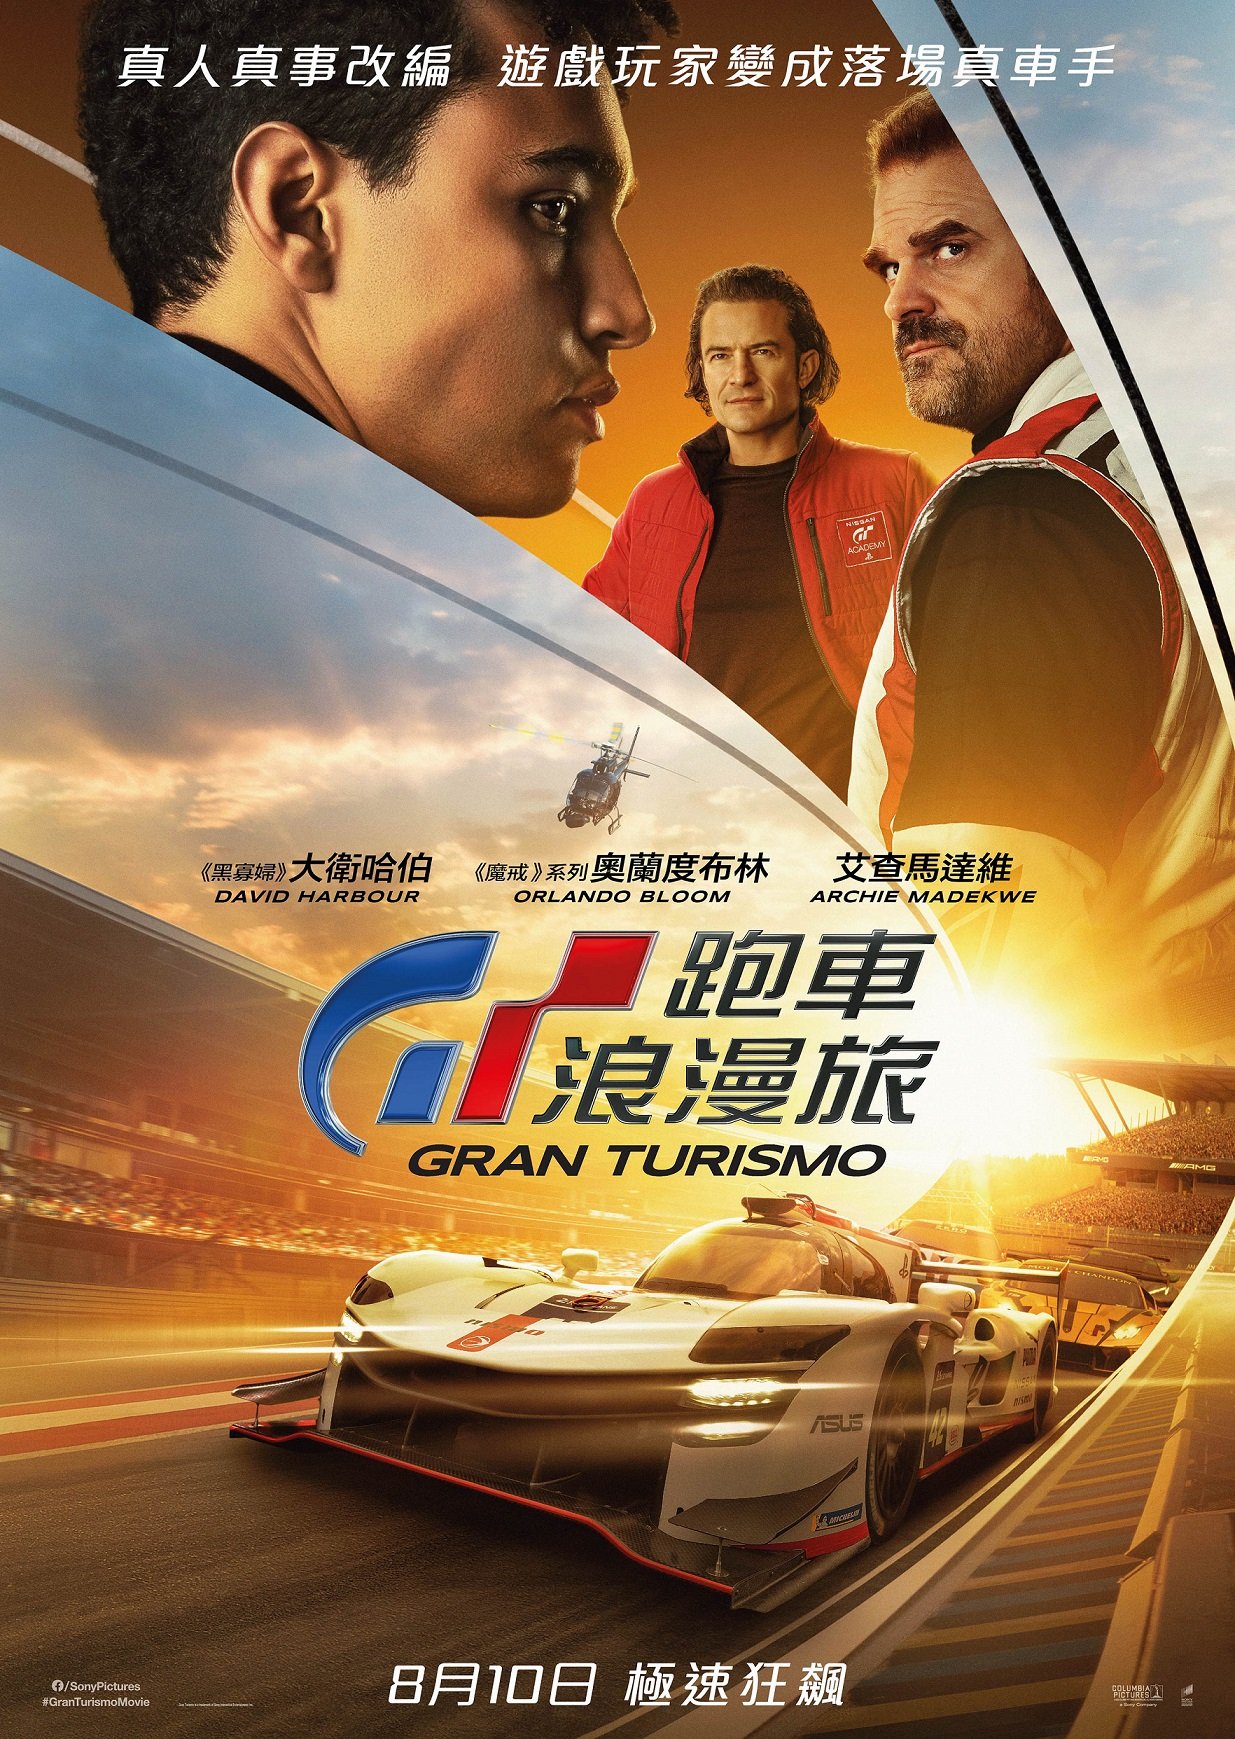 GT跑車浪漫旅電影圖片 - poster_1684080447.jpg